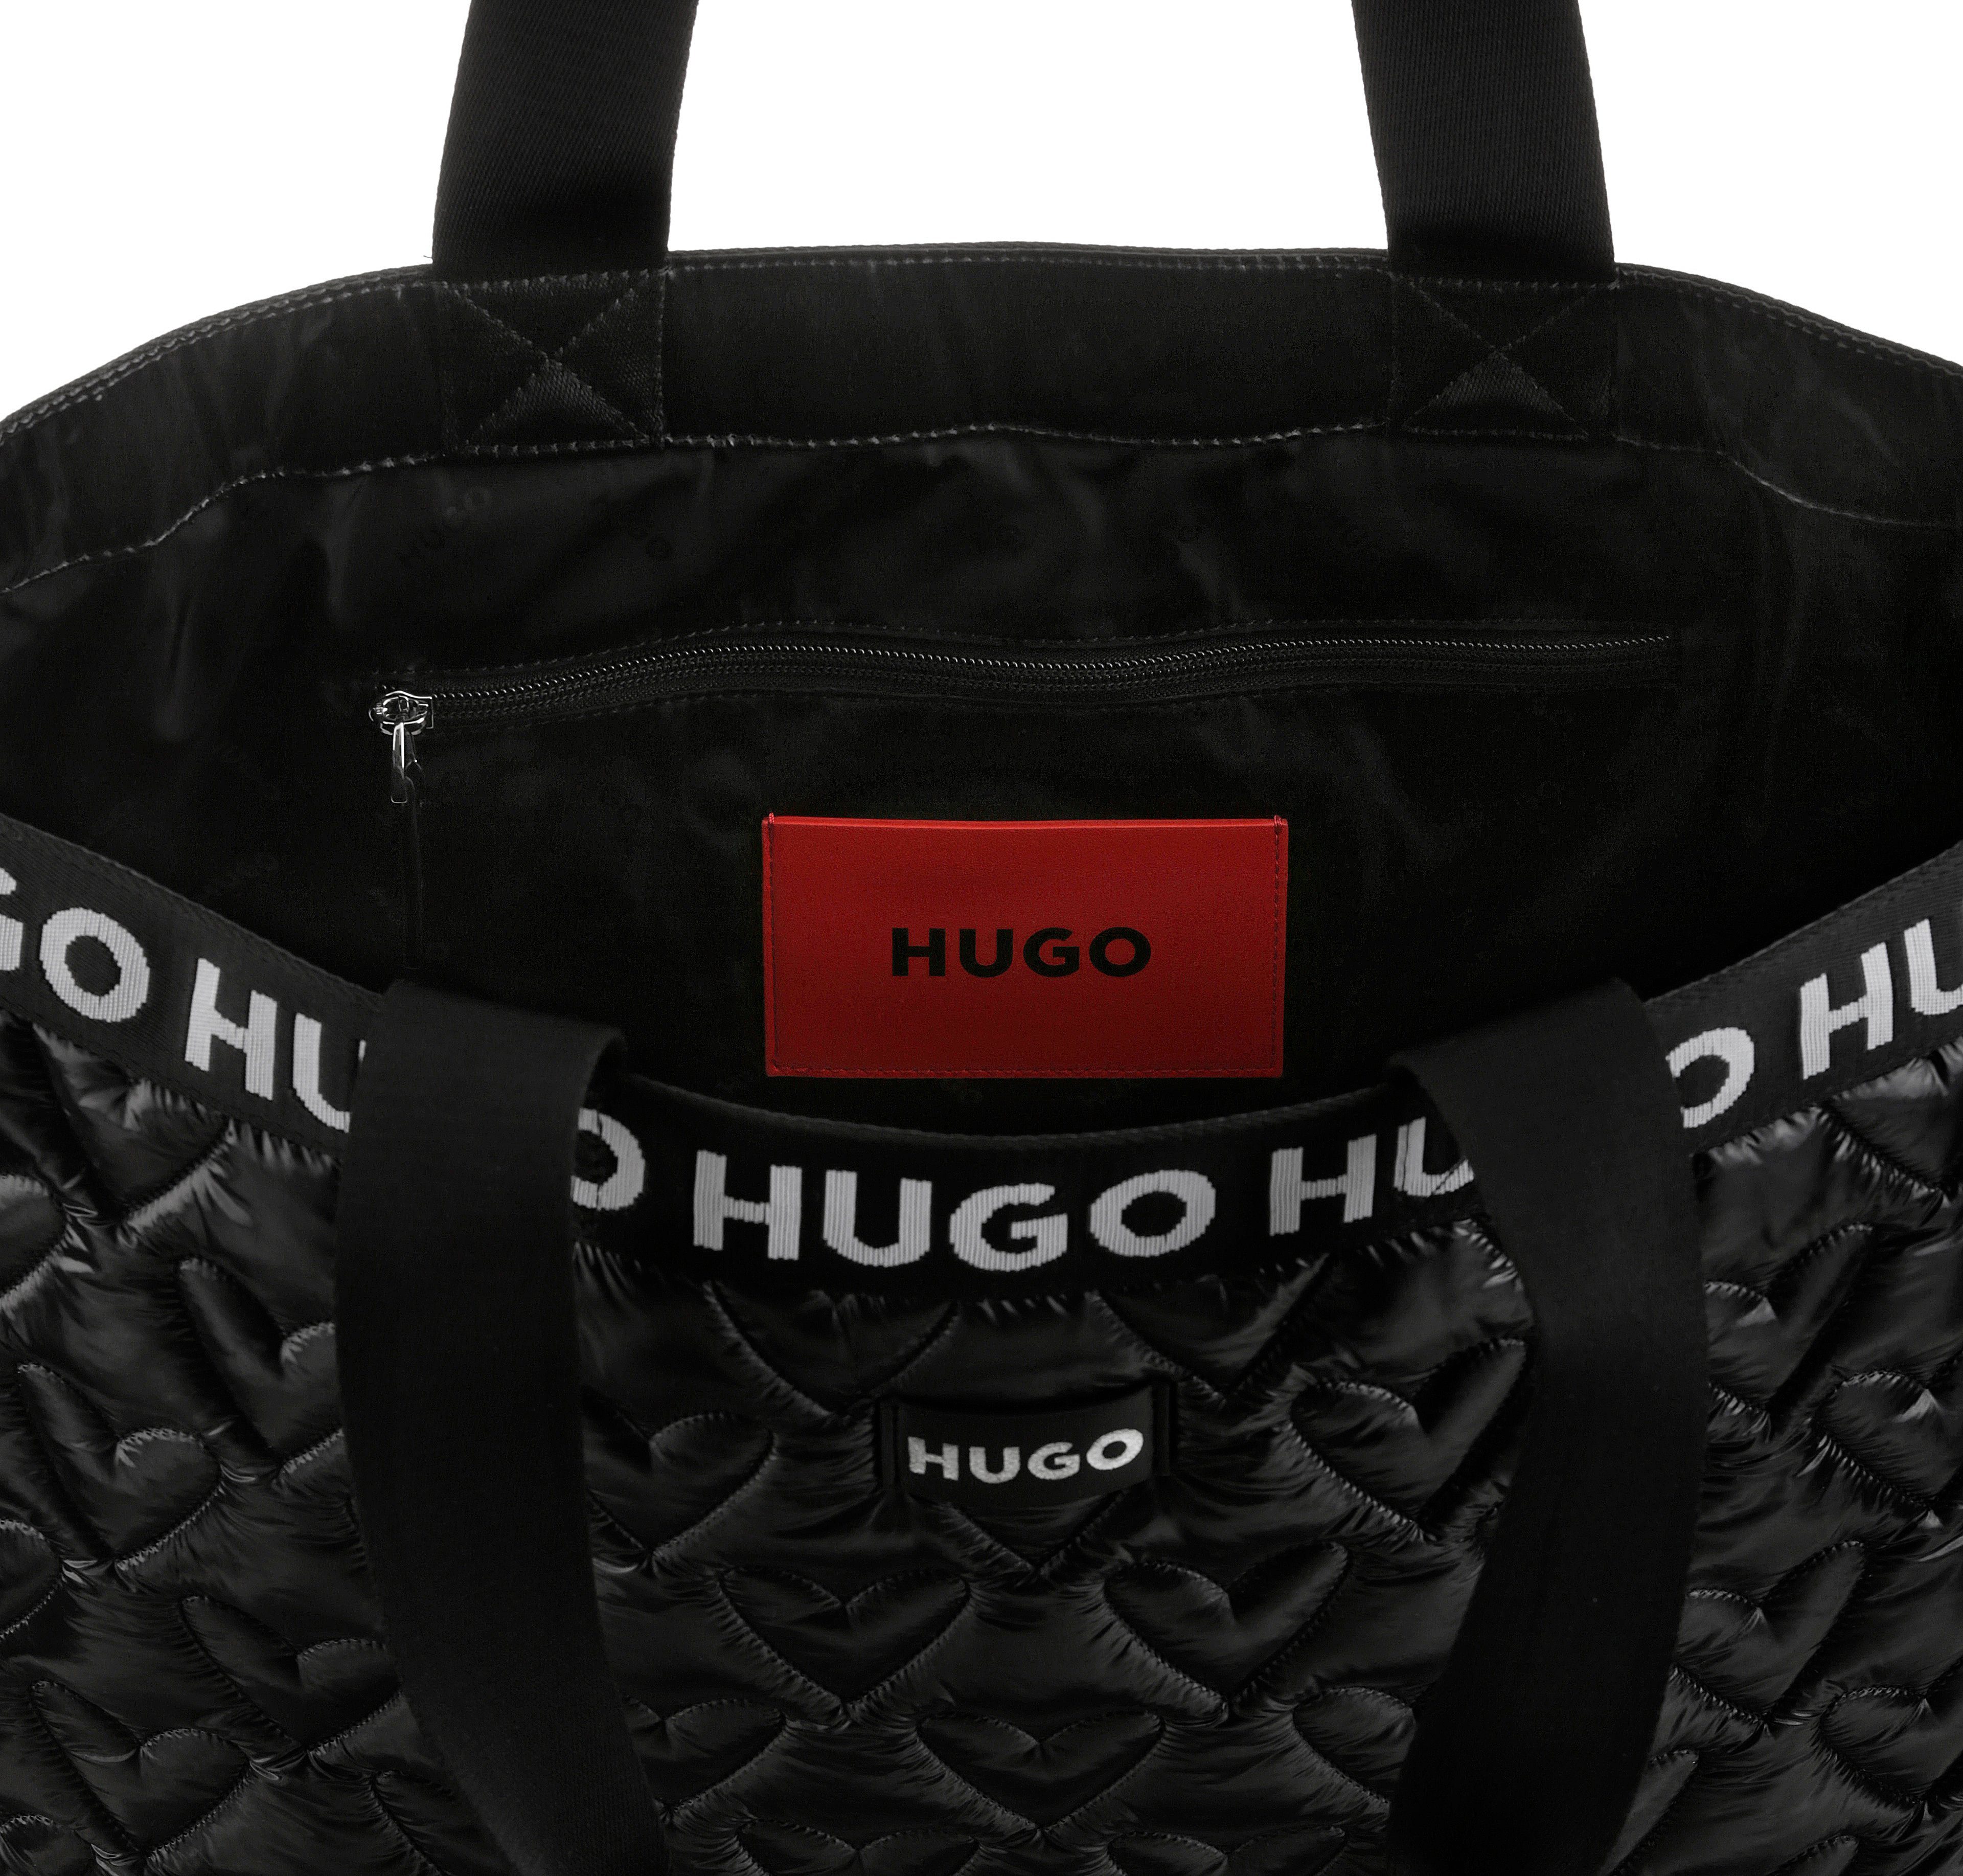 HUGO Design Becky Shopper in Tote-NQ, klassischem